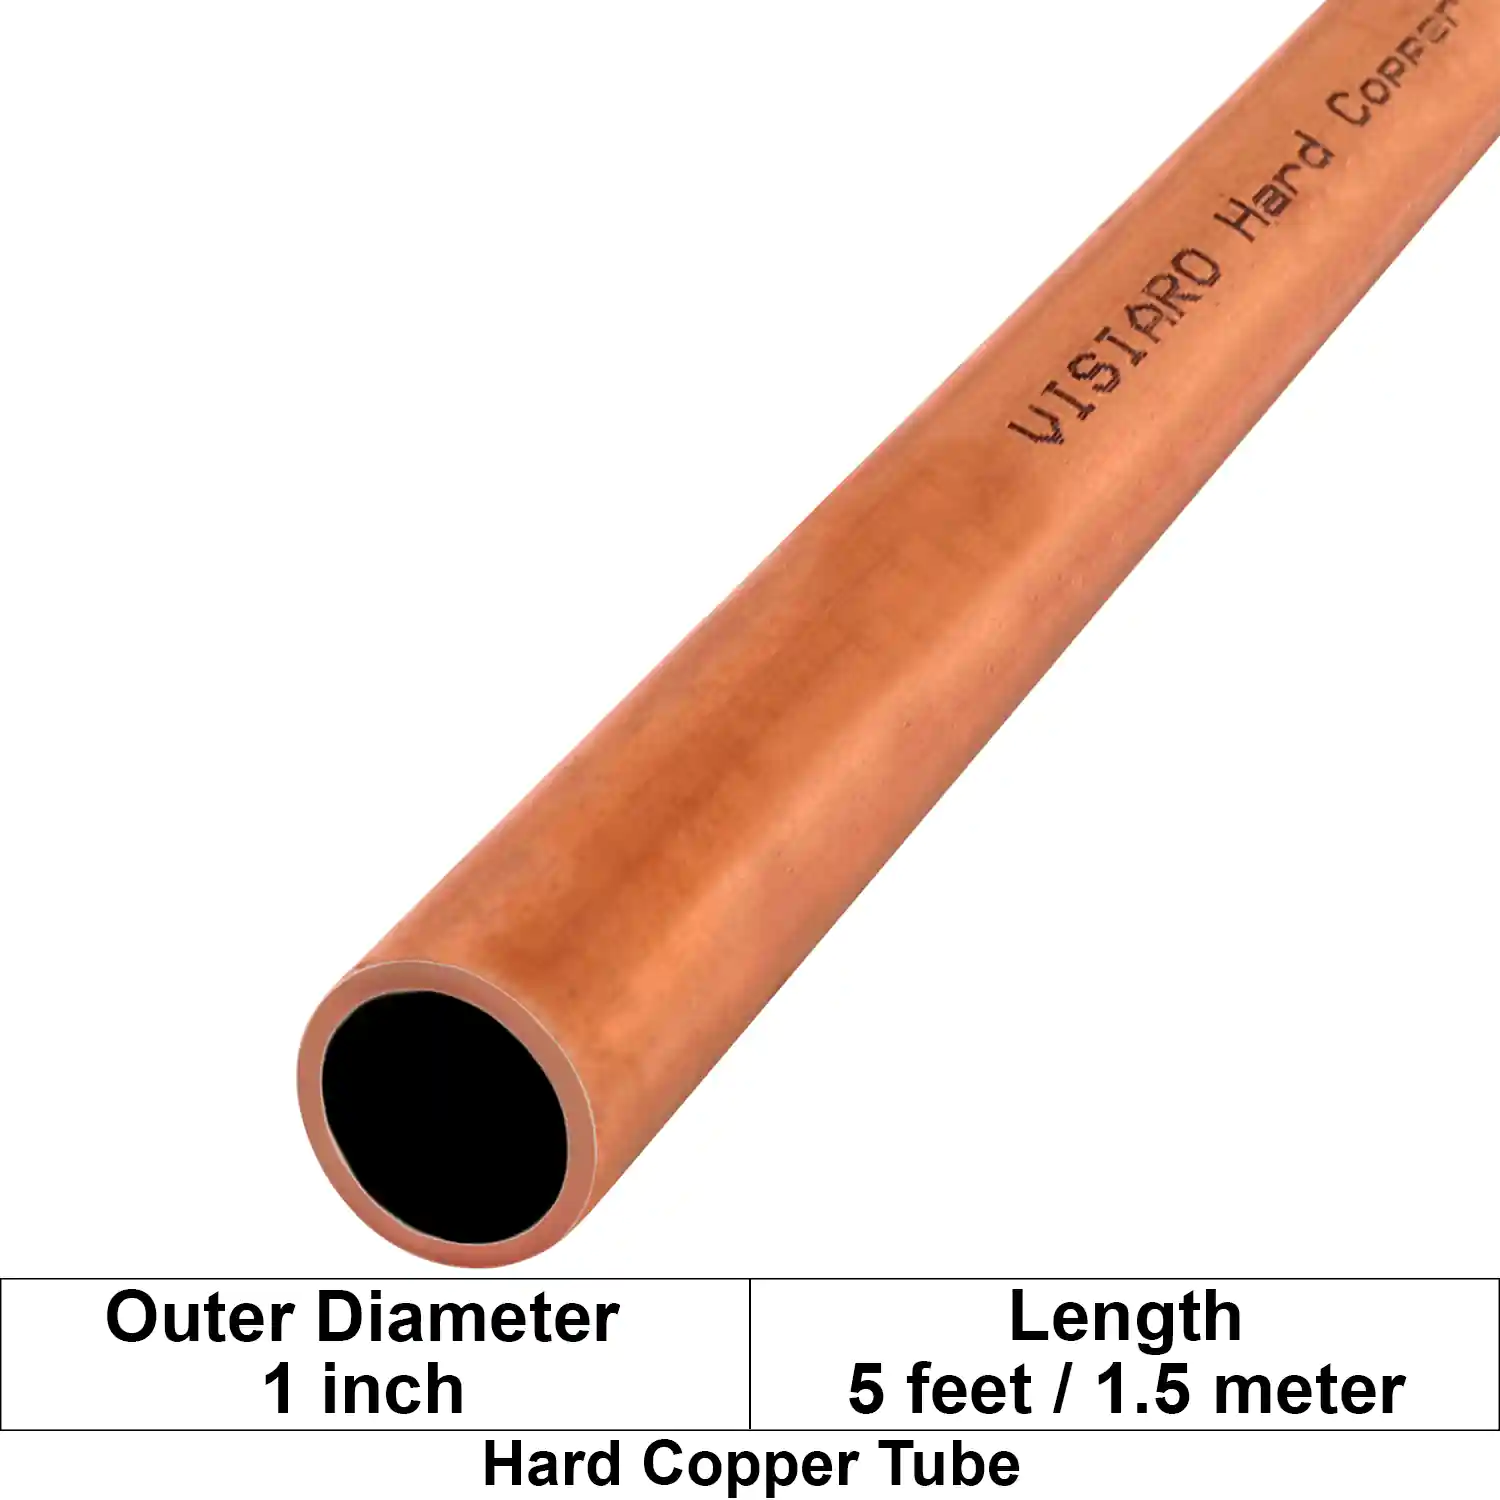 Visiaro Hard Copper Tube 5 feet long Outer Diameter - 1 inch